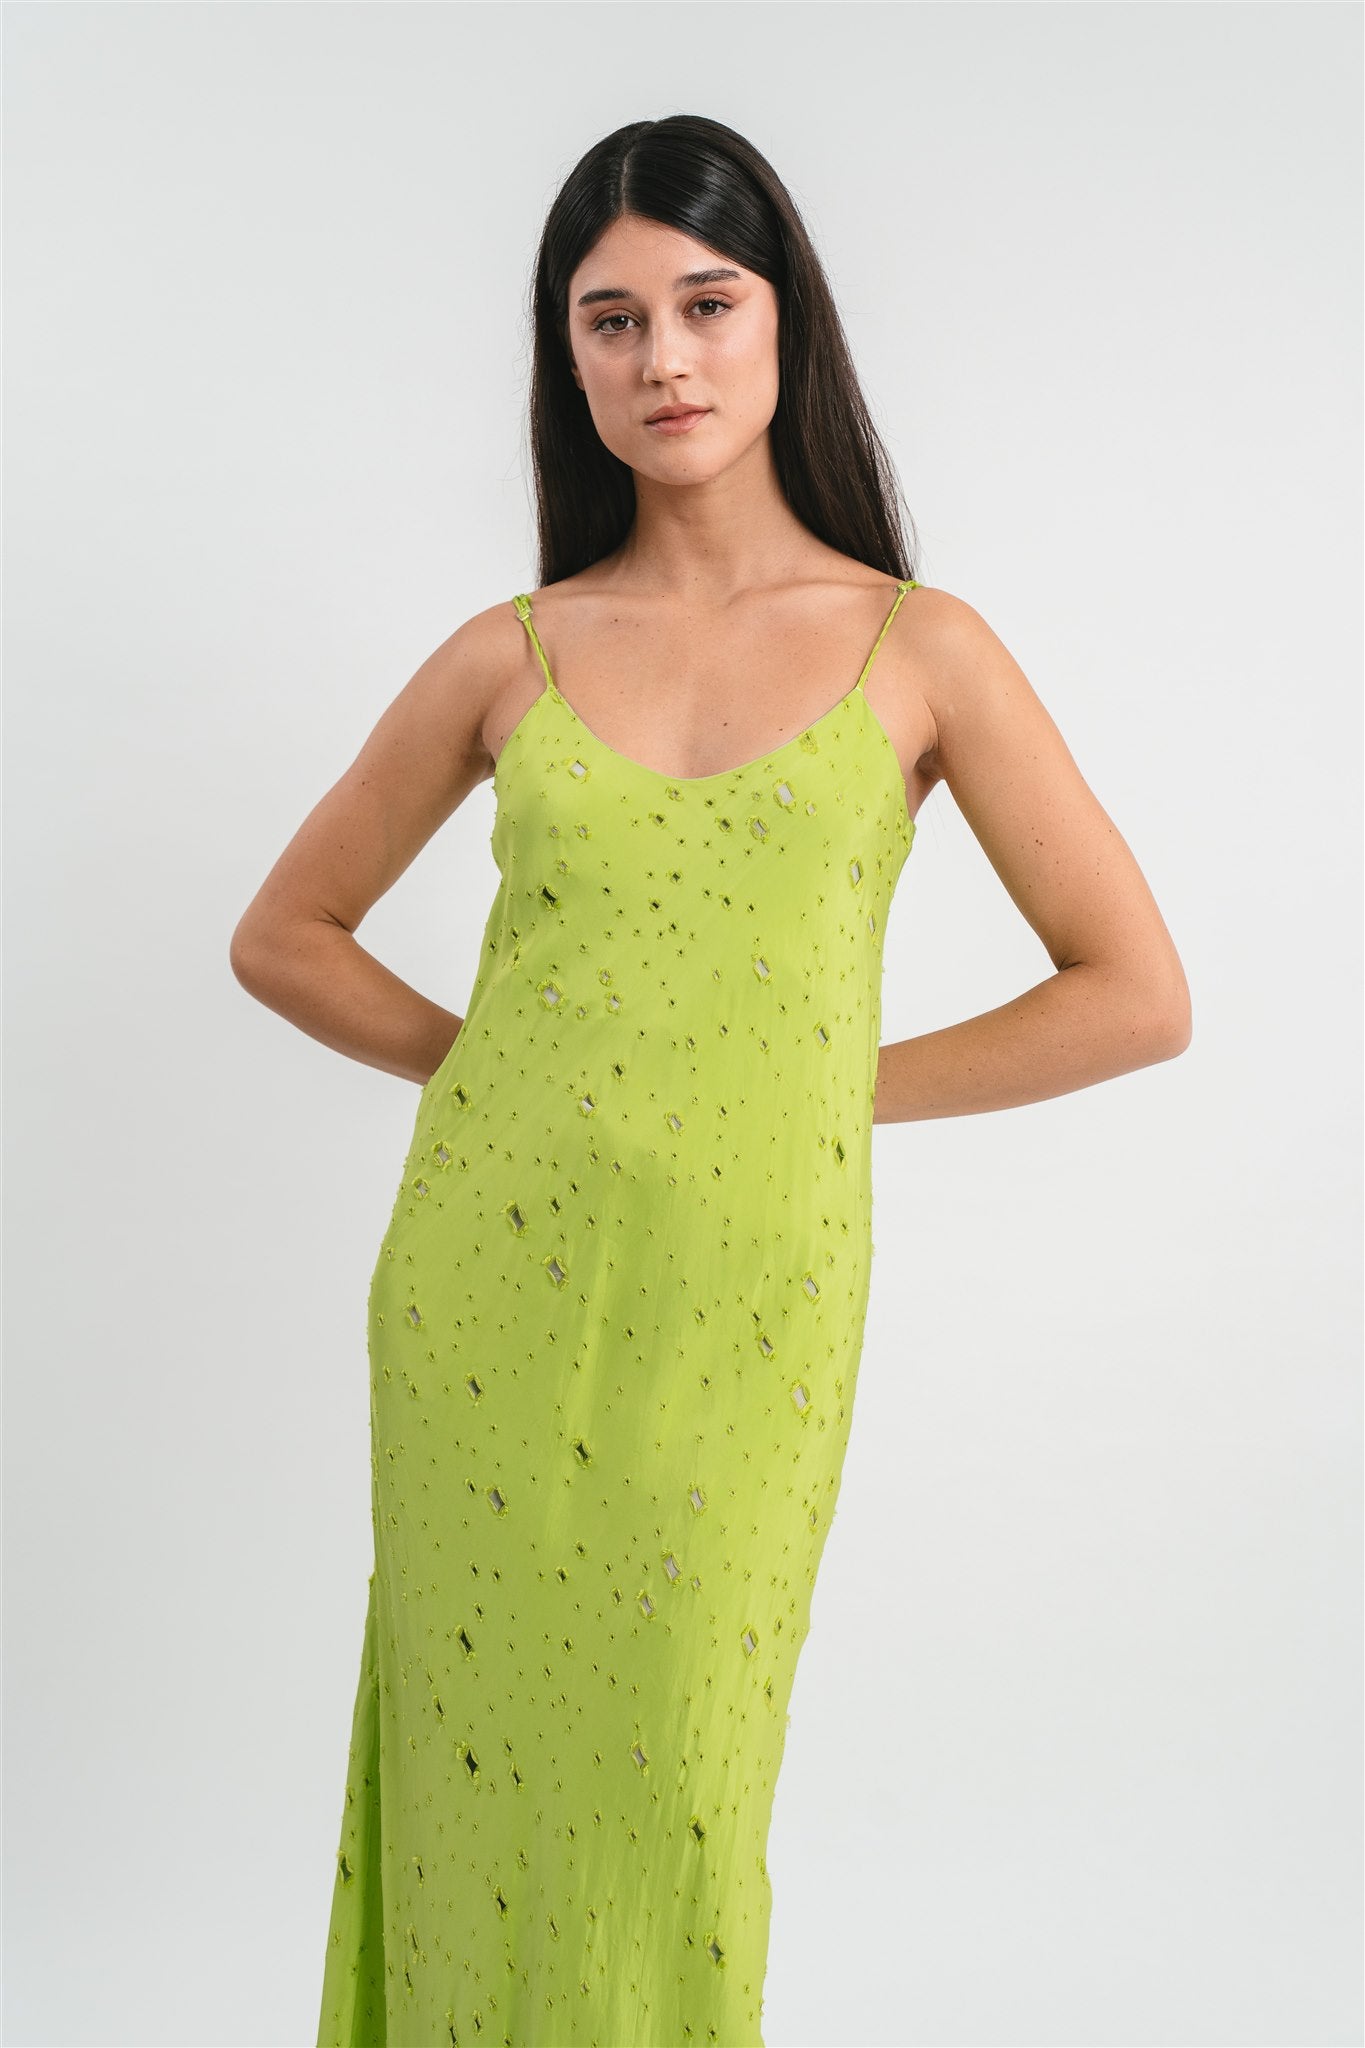 Perforated slip dress